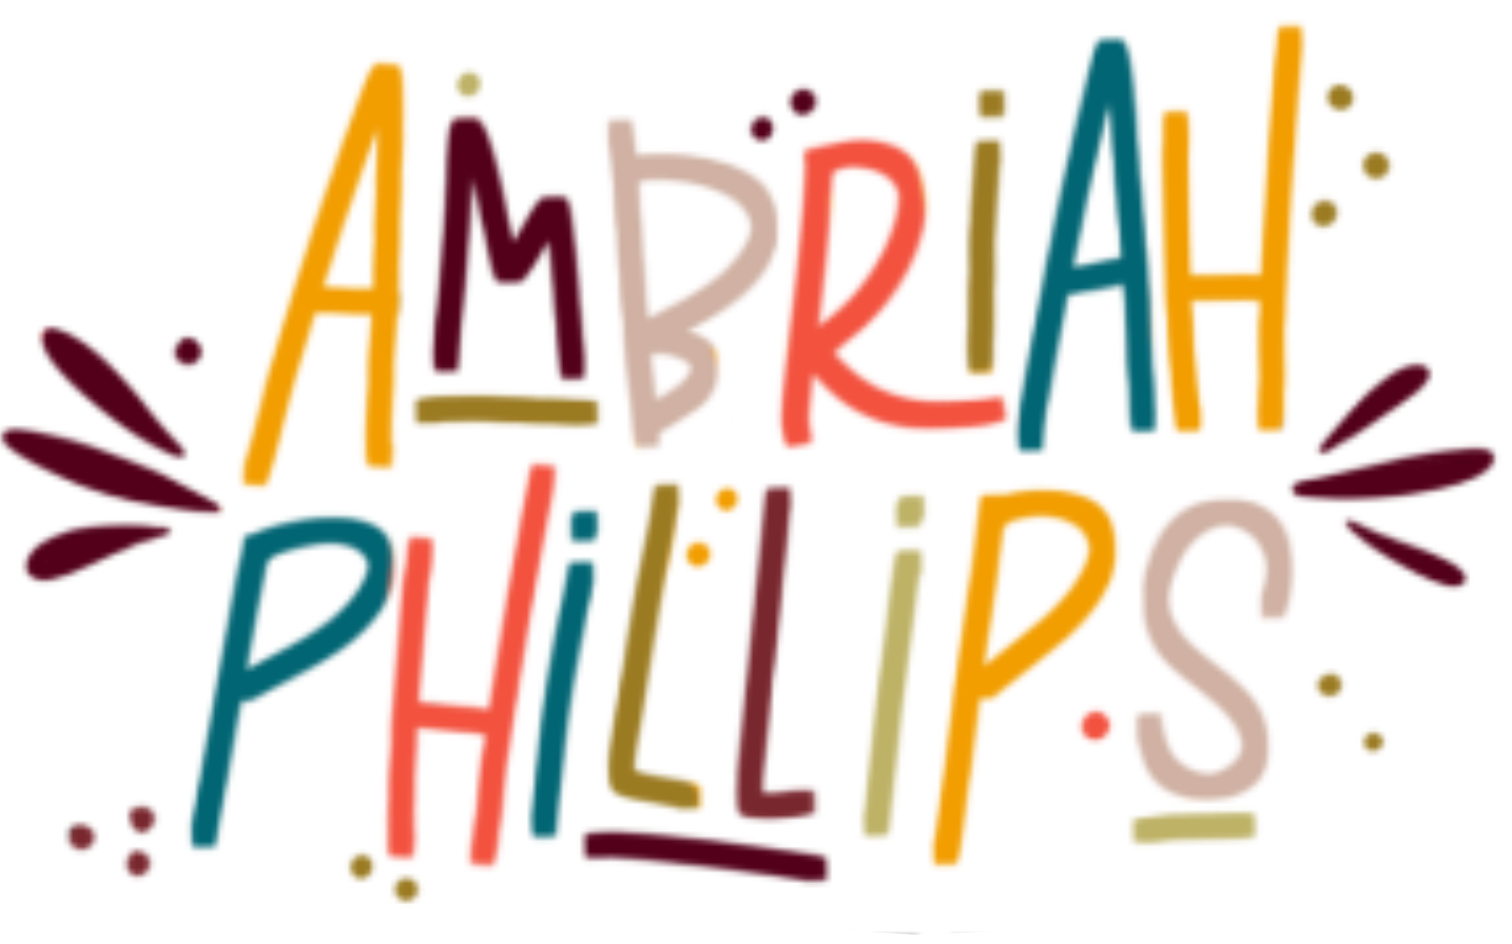 Ambriah Phillips